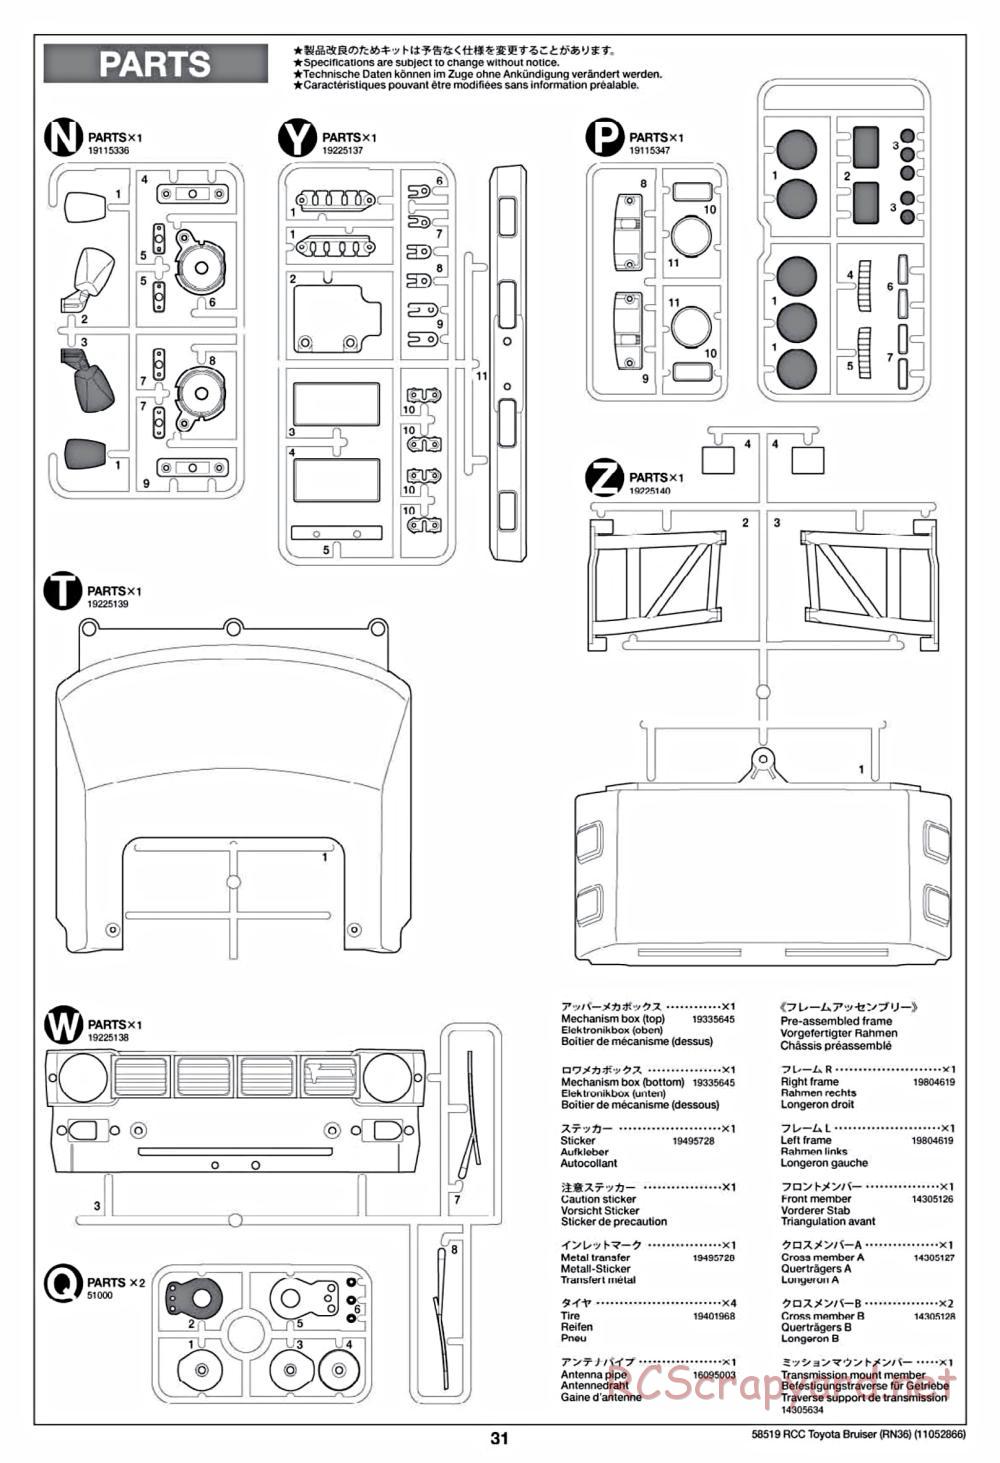 Tamiya - Toyota 4x4 Pick Up Bruiser Chassis - Manual - Page 31